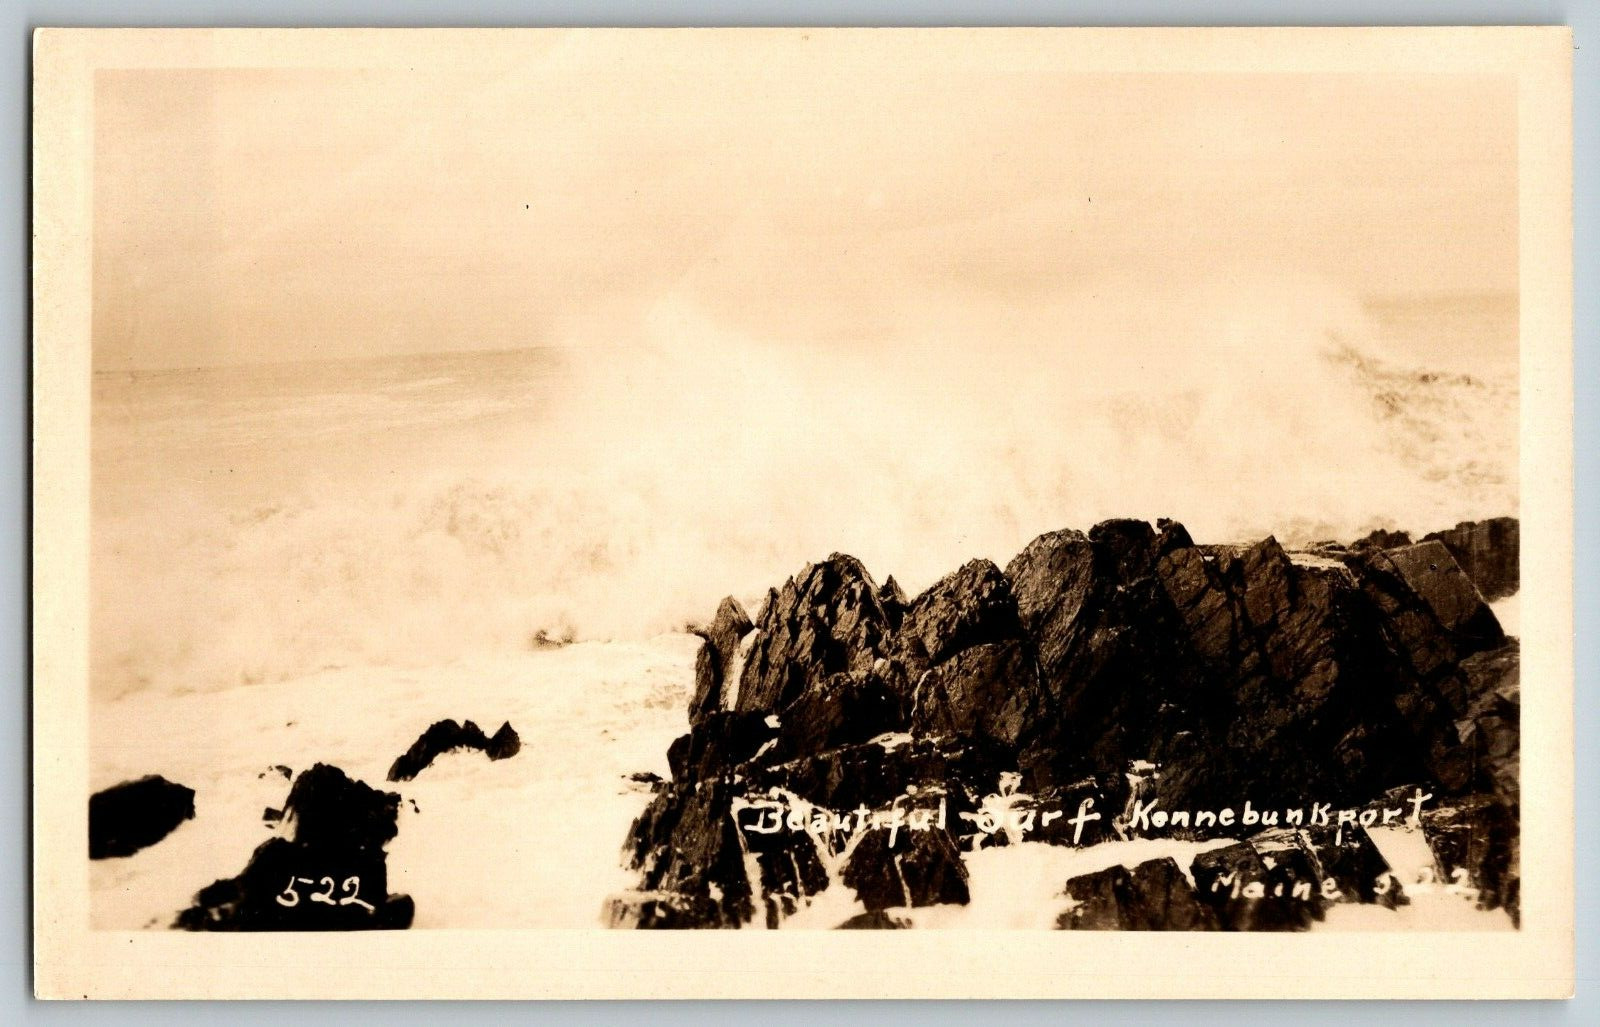 RPPC Vintage Postcard - Maine - Beautiful Surf Kennebunkport - Real Photo